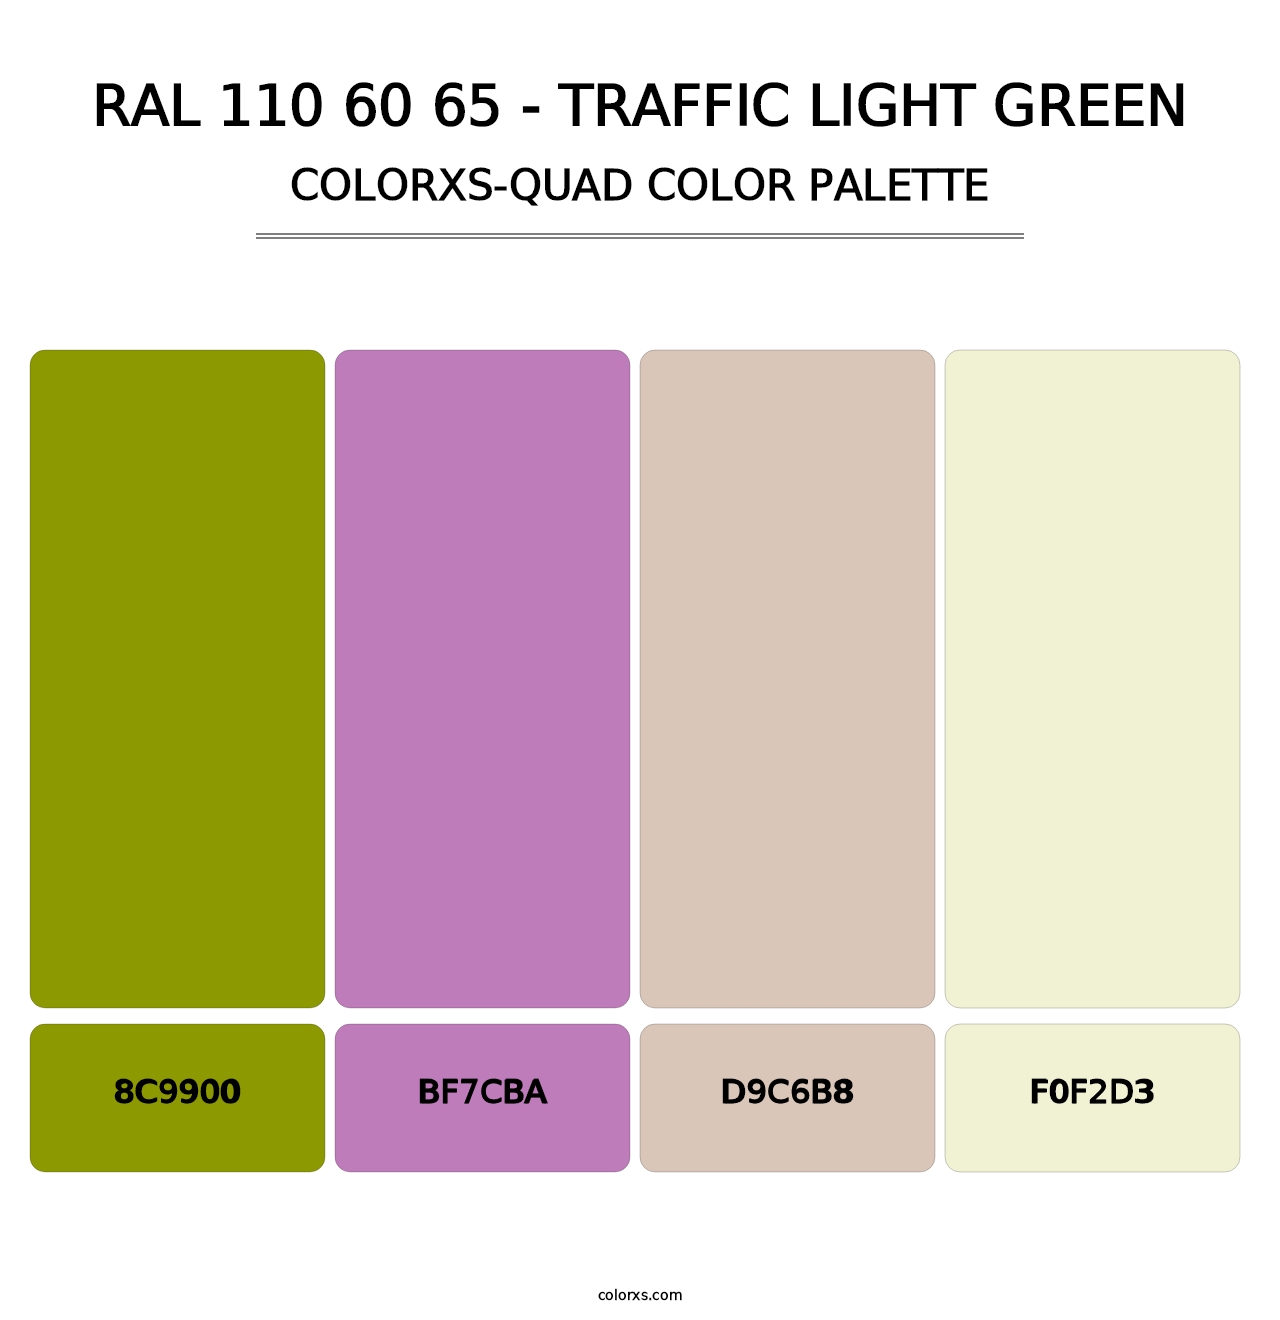 RAL 110 60 65 - Traffic Light Green - Colorxs Quad Palette